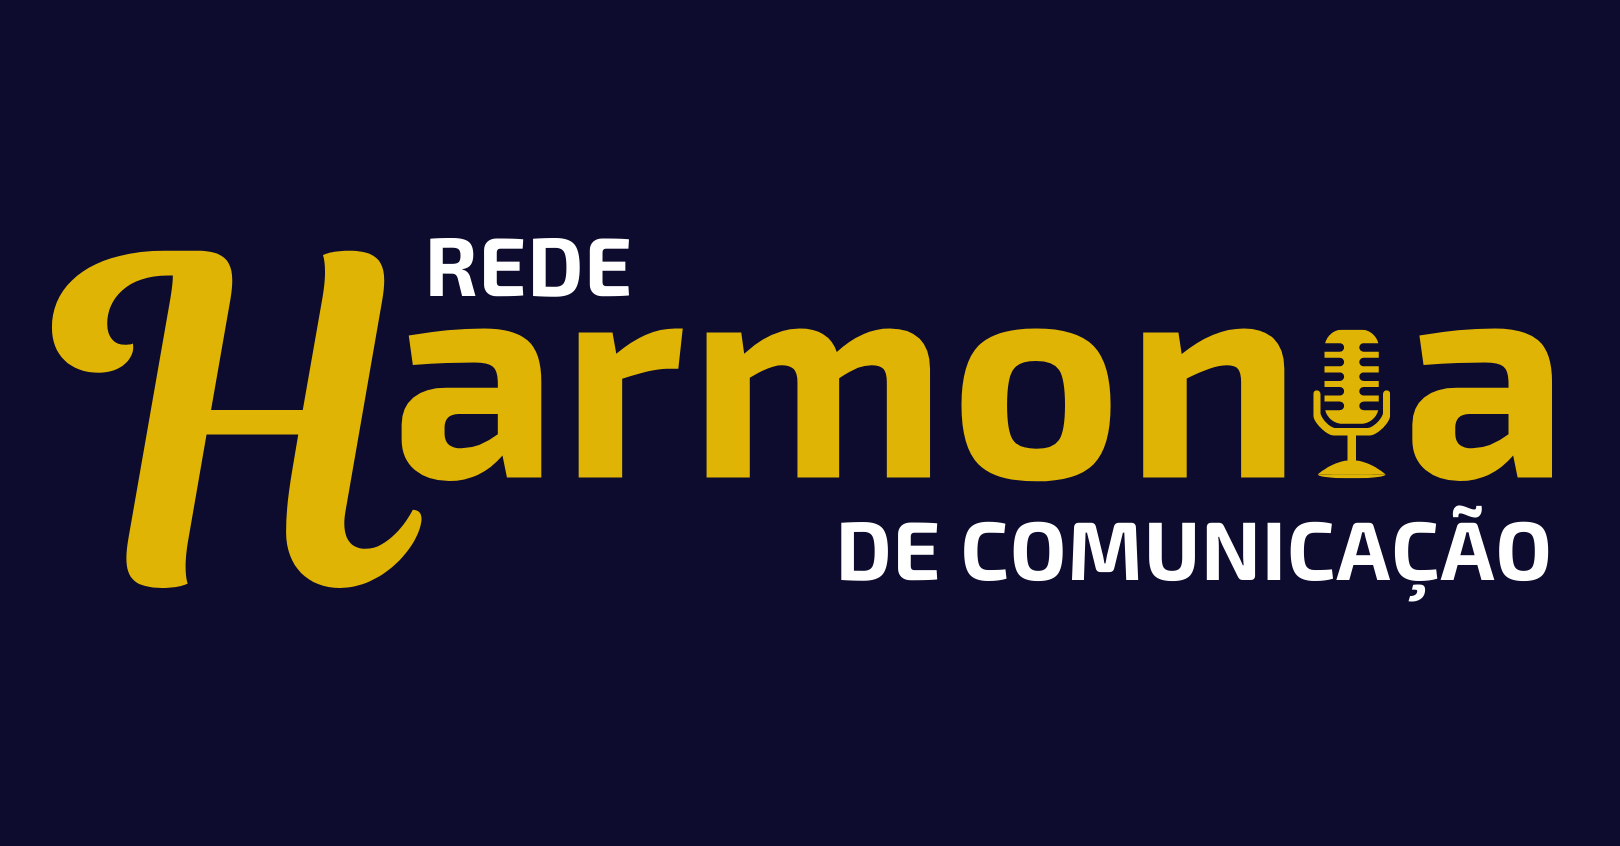 Rede Harmonia